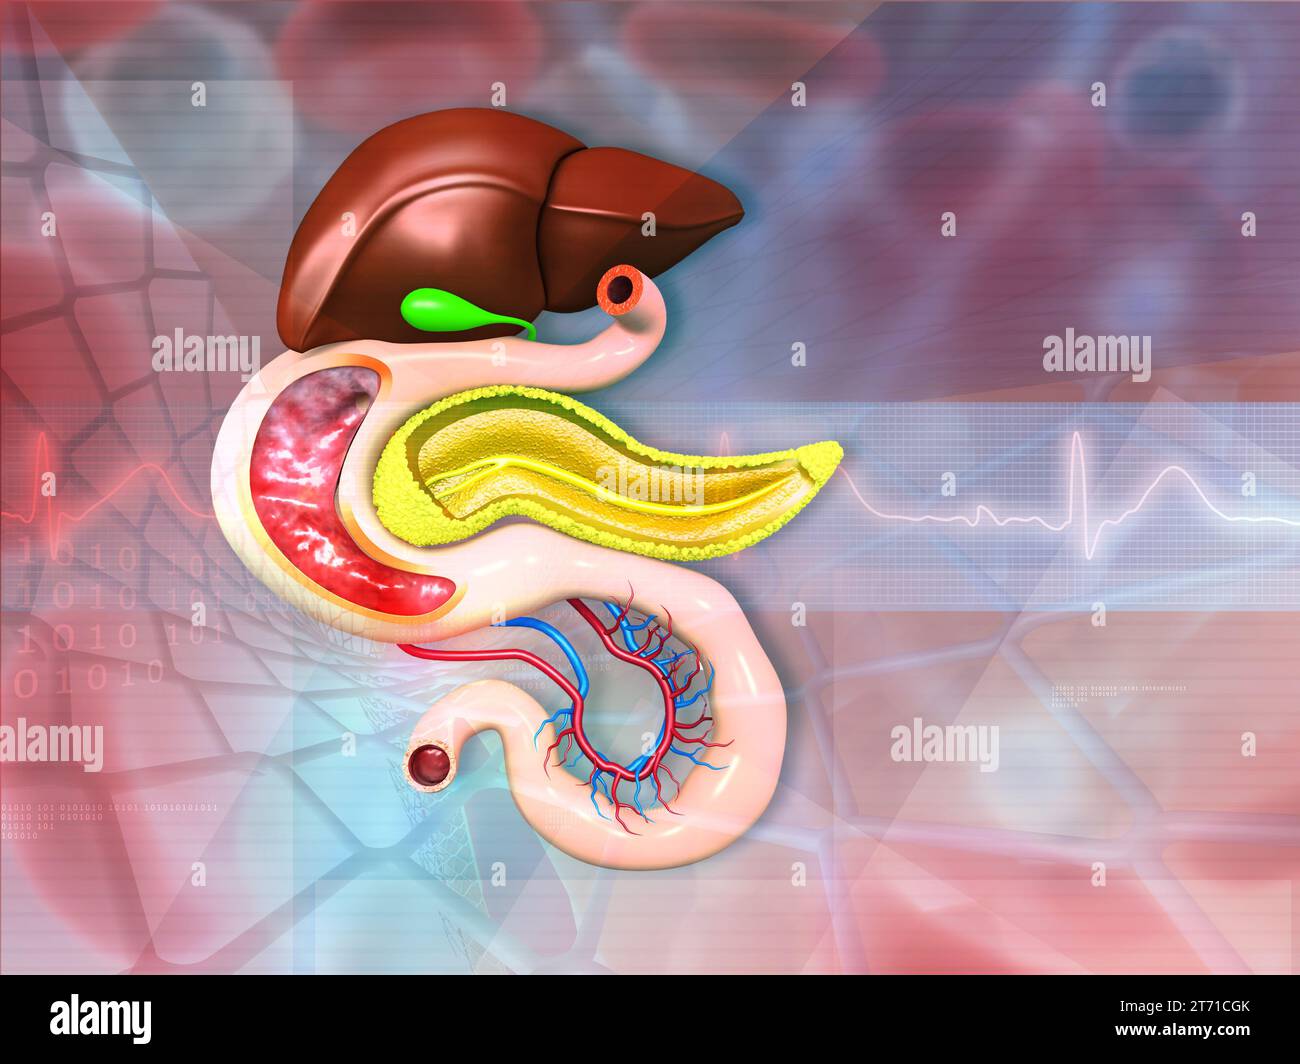 Anatomy of human digestive system on medical background. 3d illustration Stock Photo